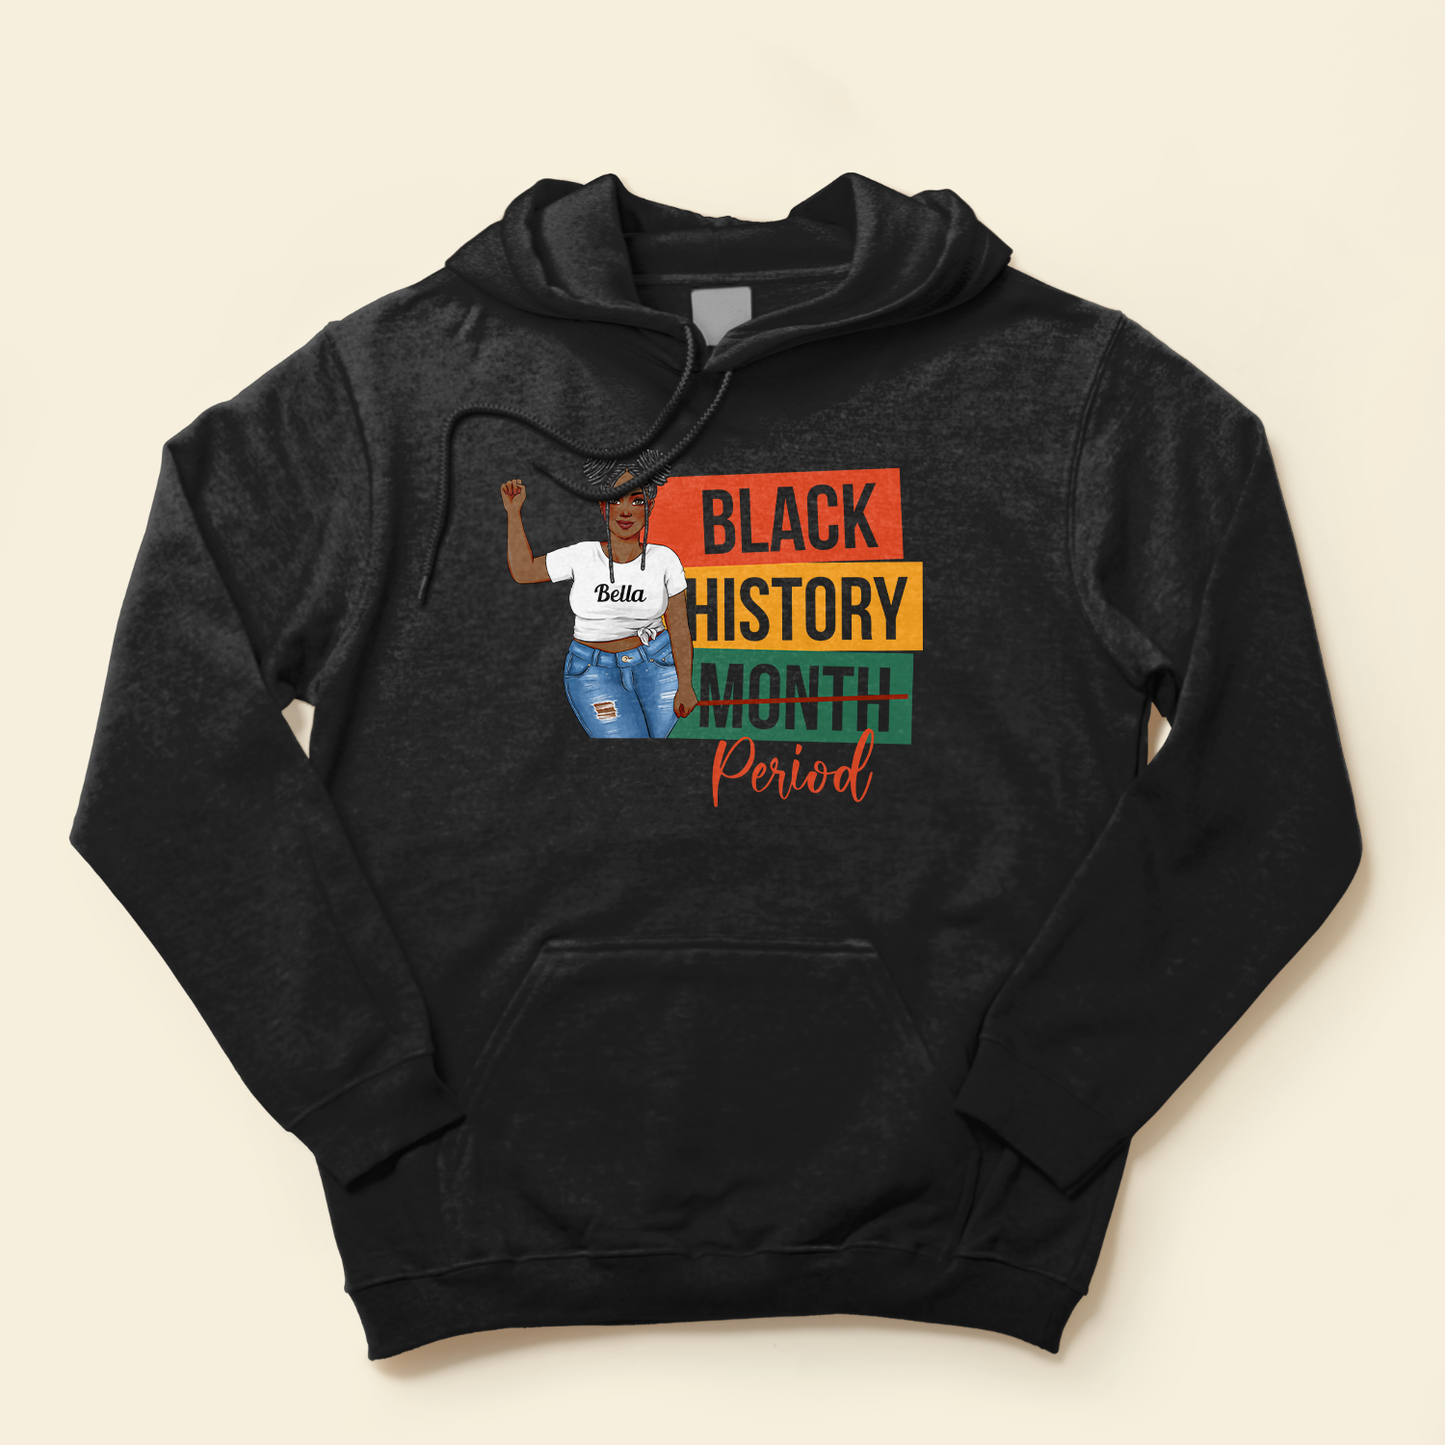 Black History Period - Personalized Shirt - Birthday, Anniversary Gift For Black Girl, Black Woman